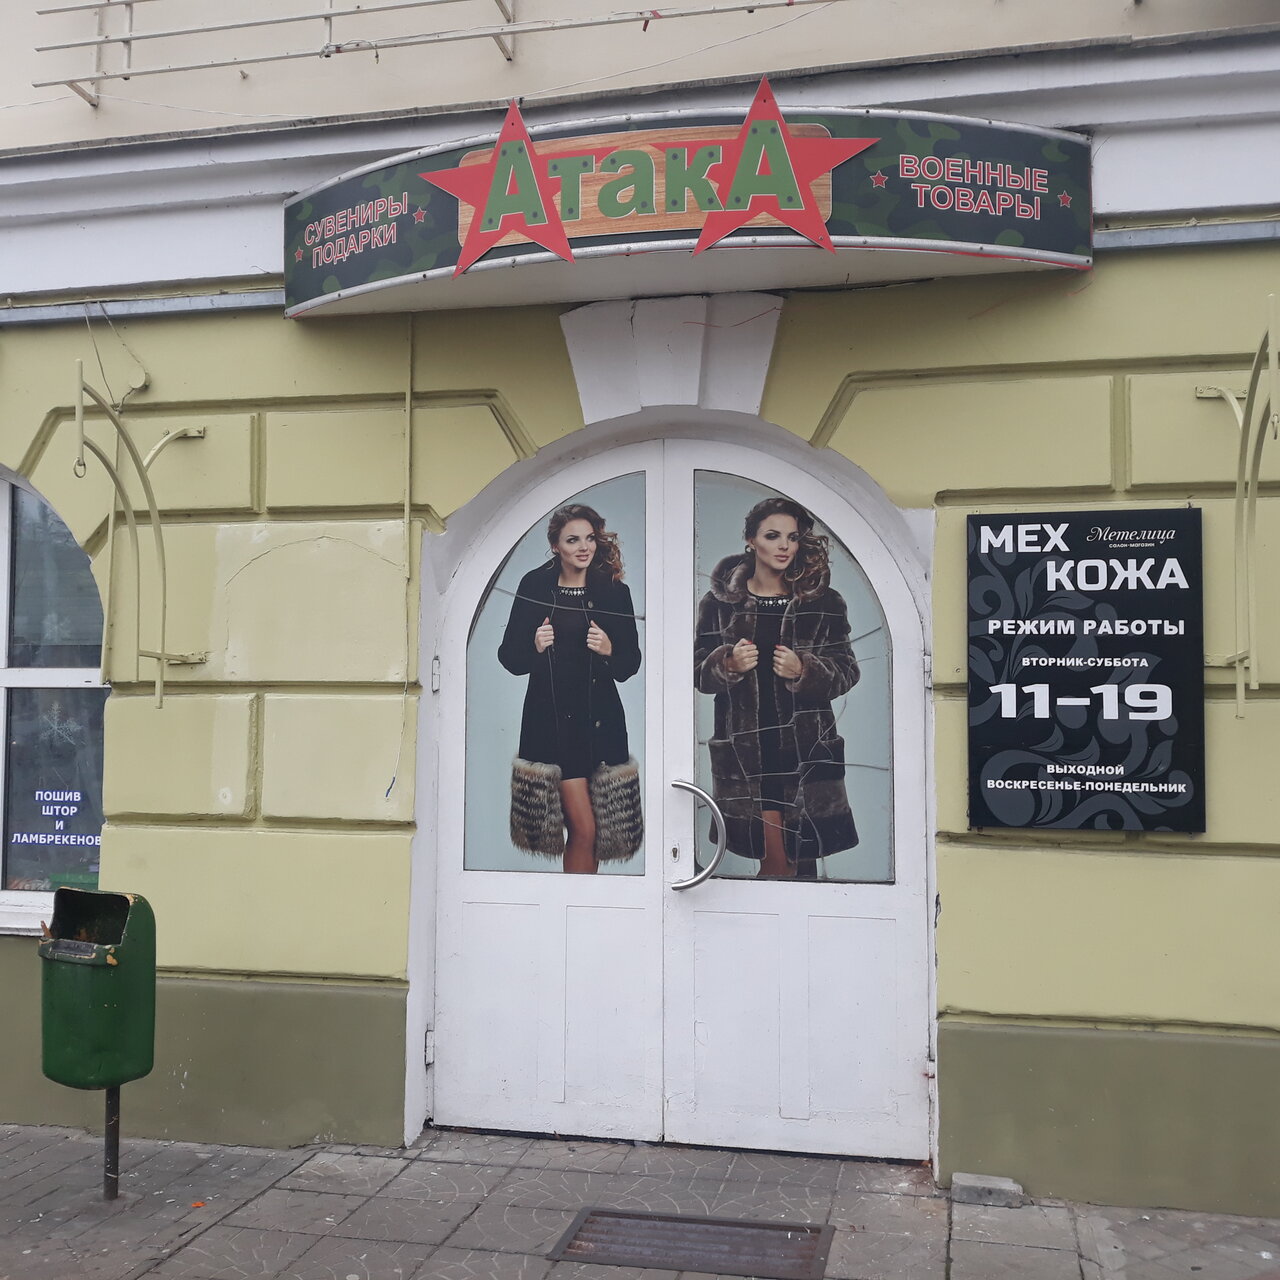 Армейский магазин "АтакА" на проспекте Победы в Гомеле